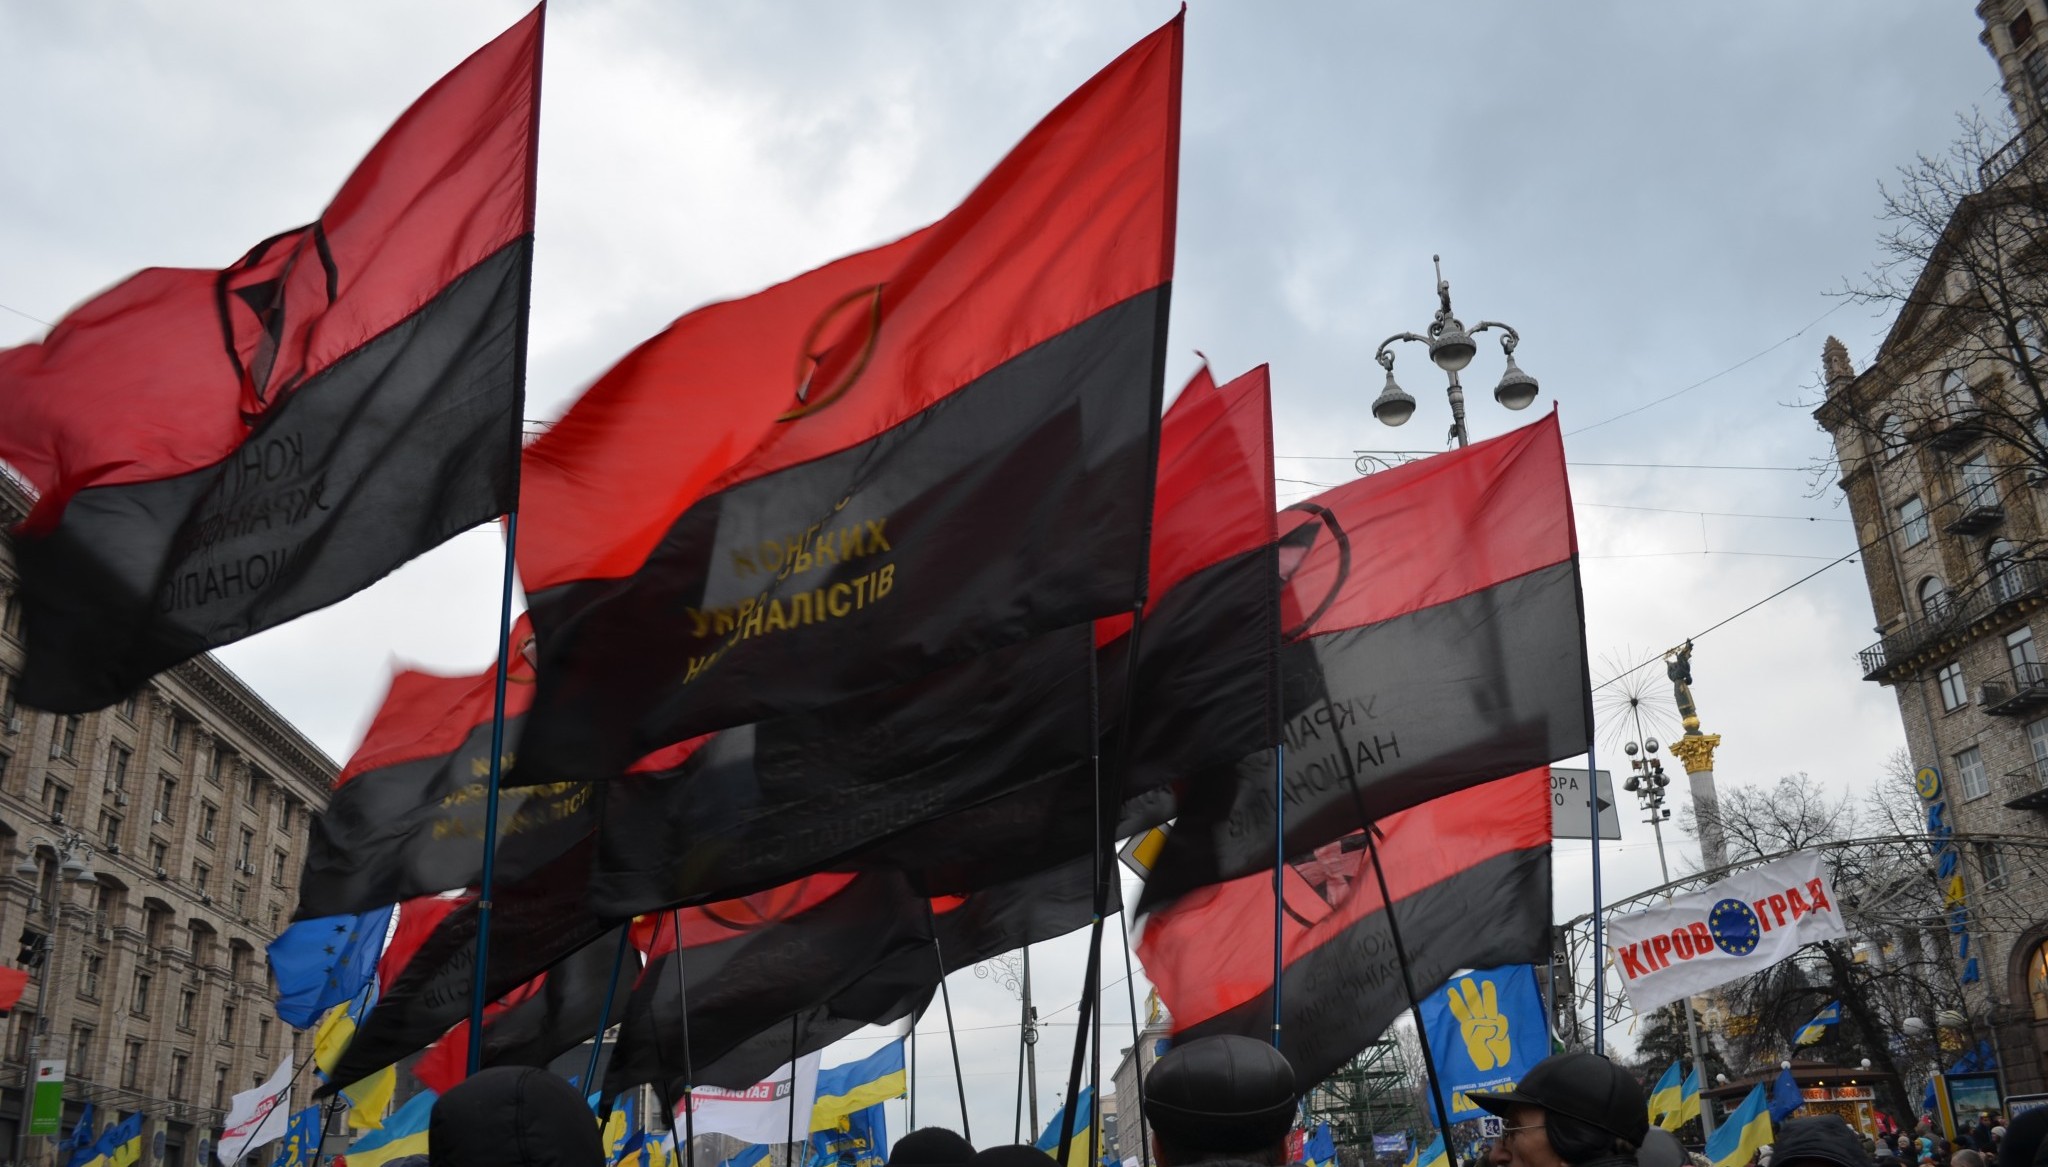 Euromaidan, rebirth of the Ukrainian nation, and the German debate on Ukraine’s national identity